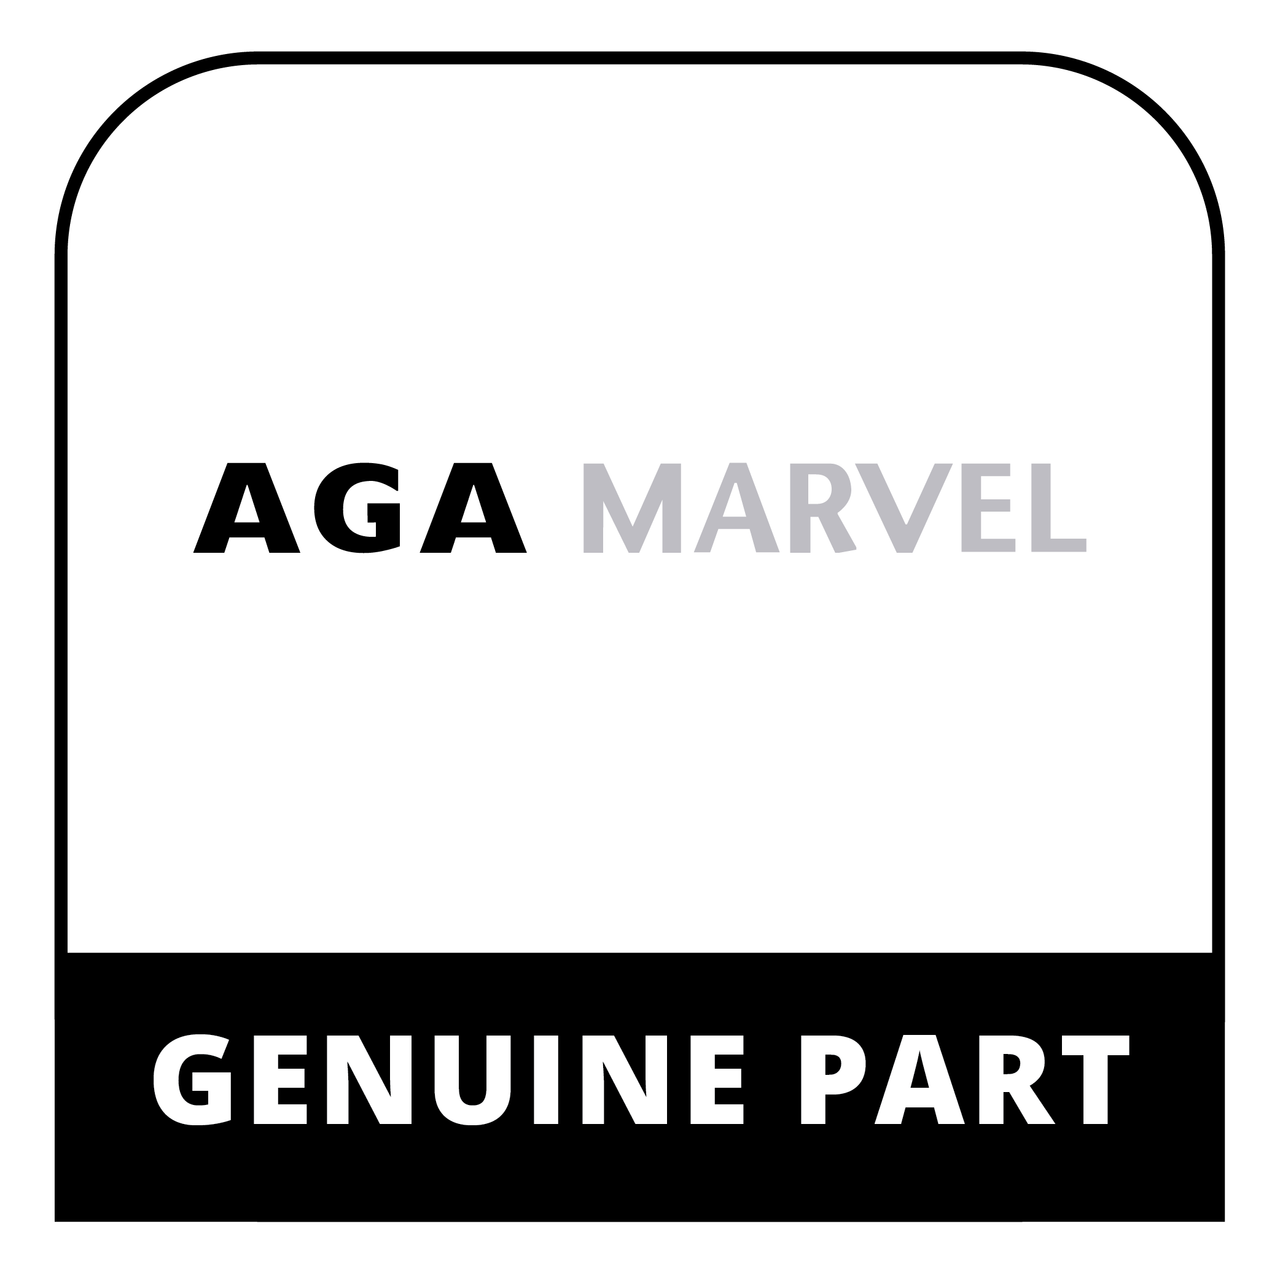 AGA Marvel R2813 - Terminal Block Cover Roy Gdo - Genuine AGA Marvel Part